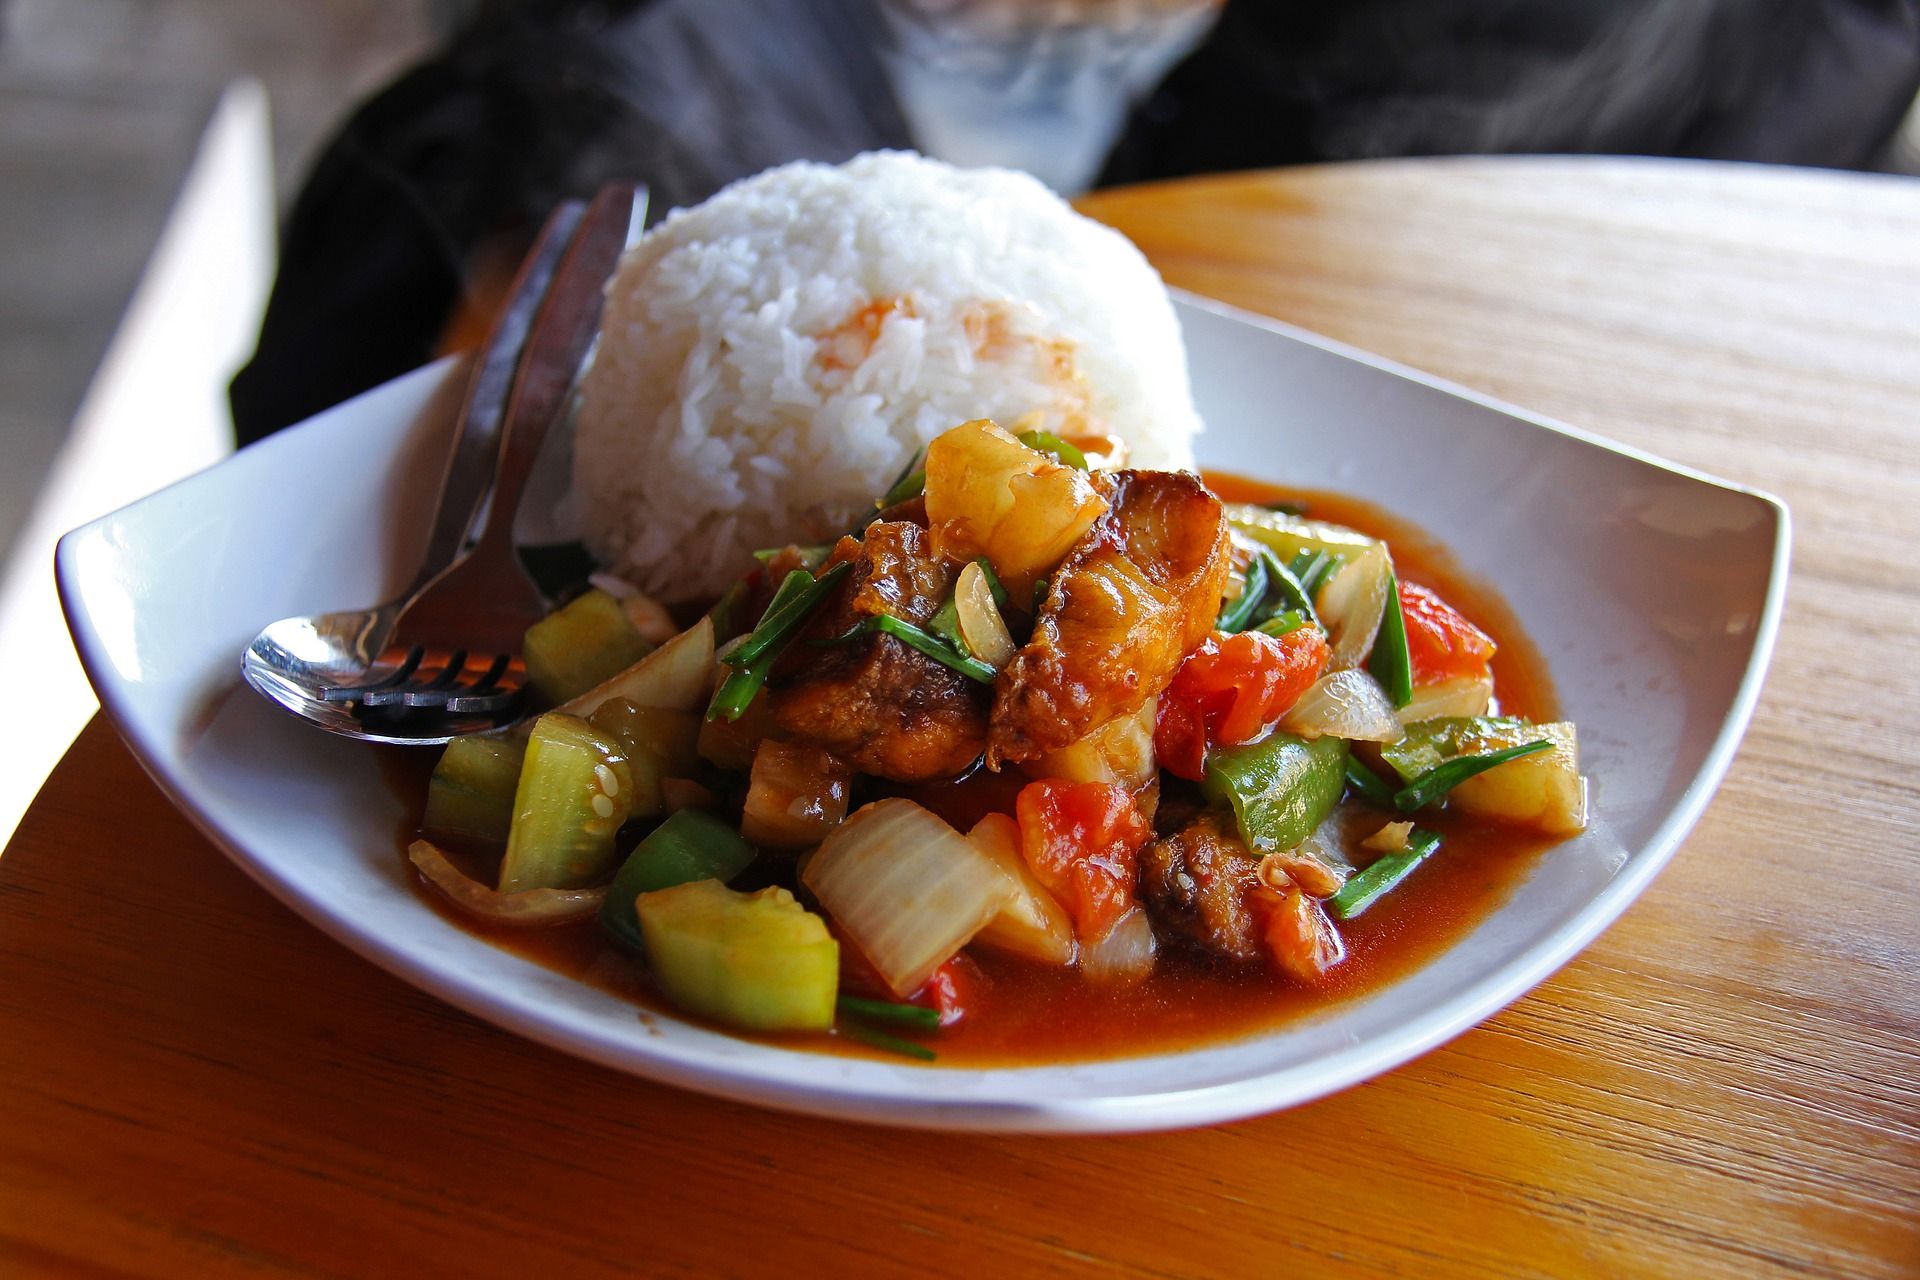 Menu makanan buka puasa, nasi sayur tumis (foto dari pixabay/sharonang)